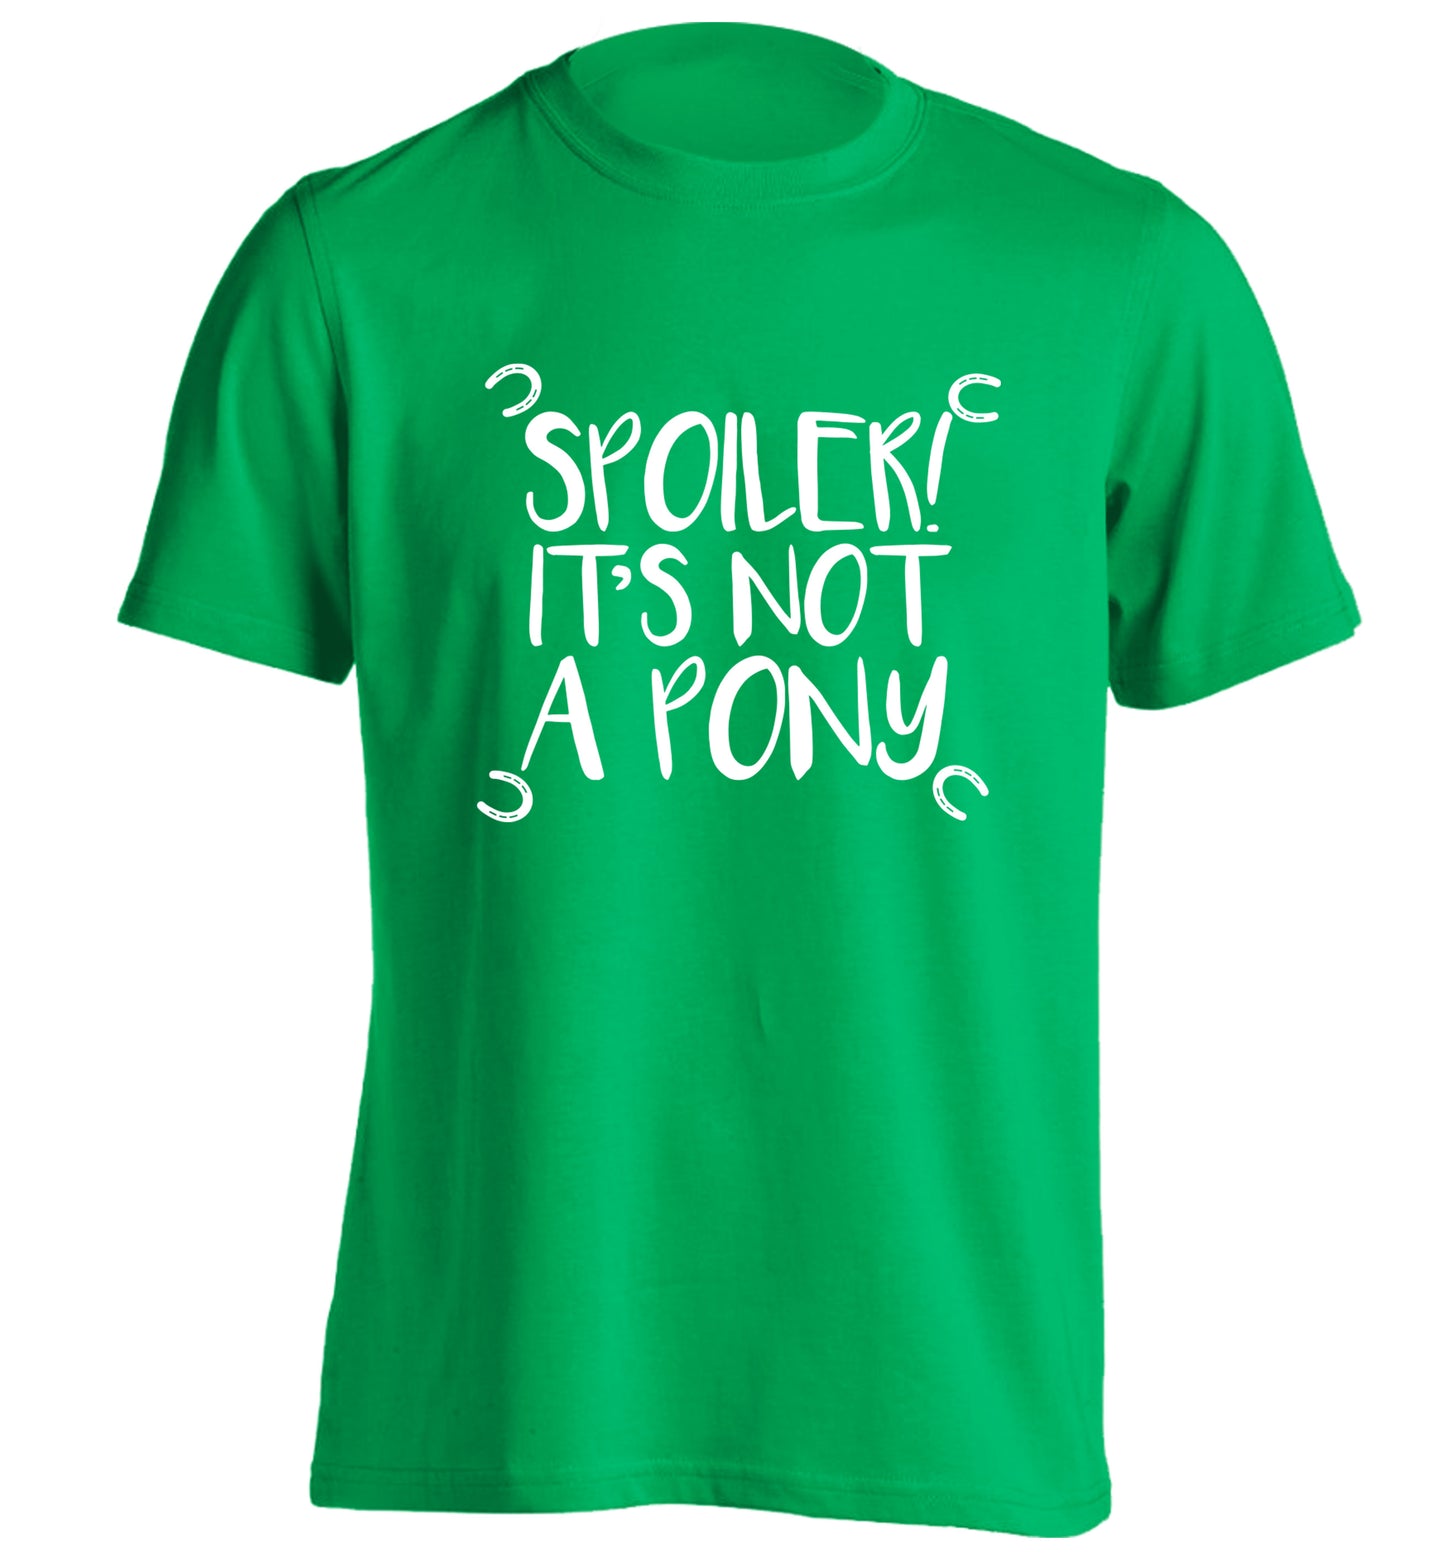 Spoiler it's not a pony adults unisex green Tshirt 2XL